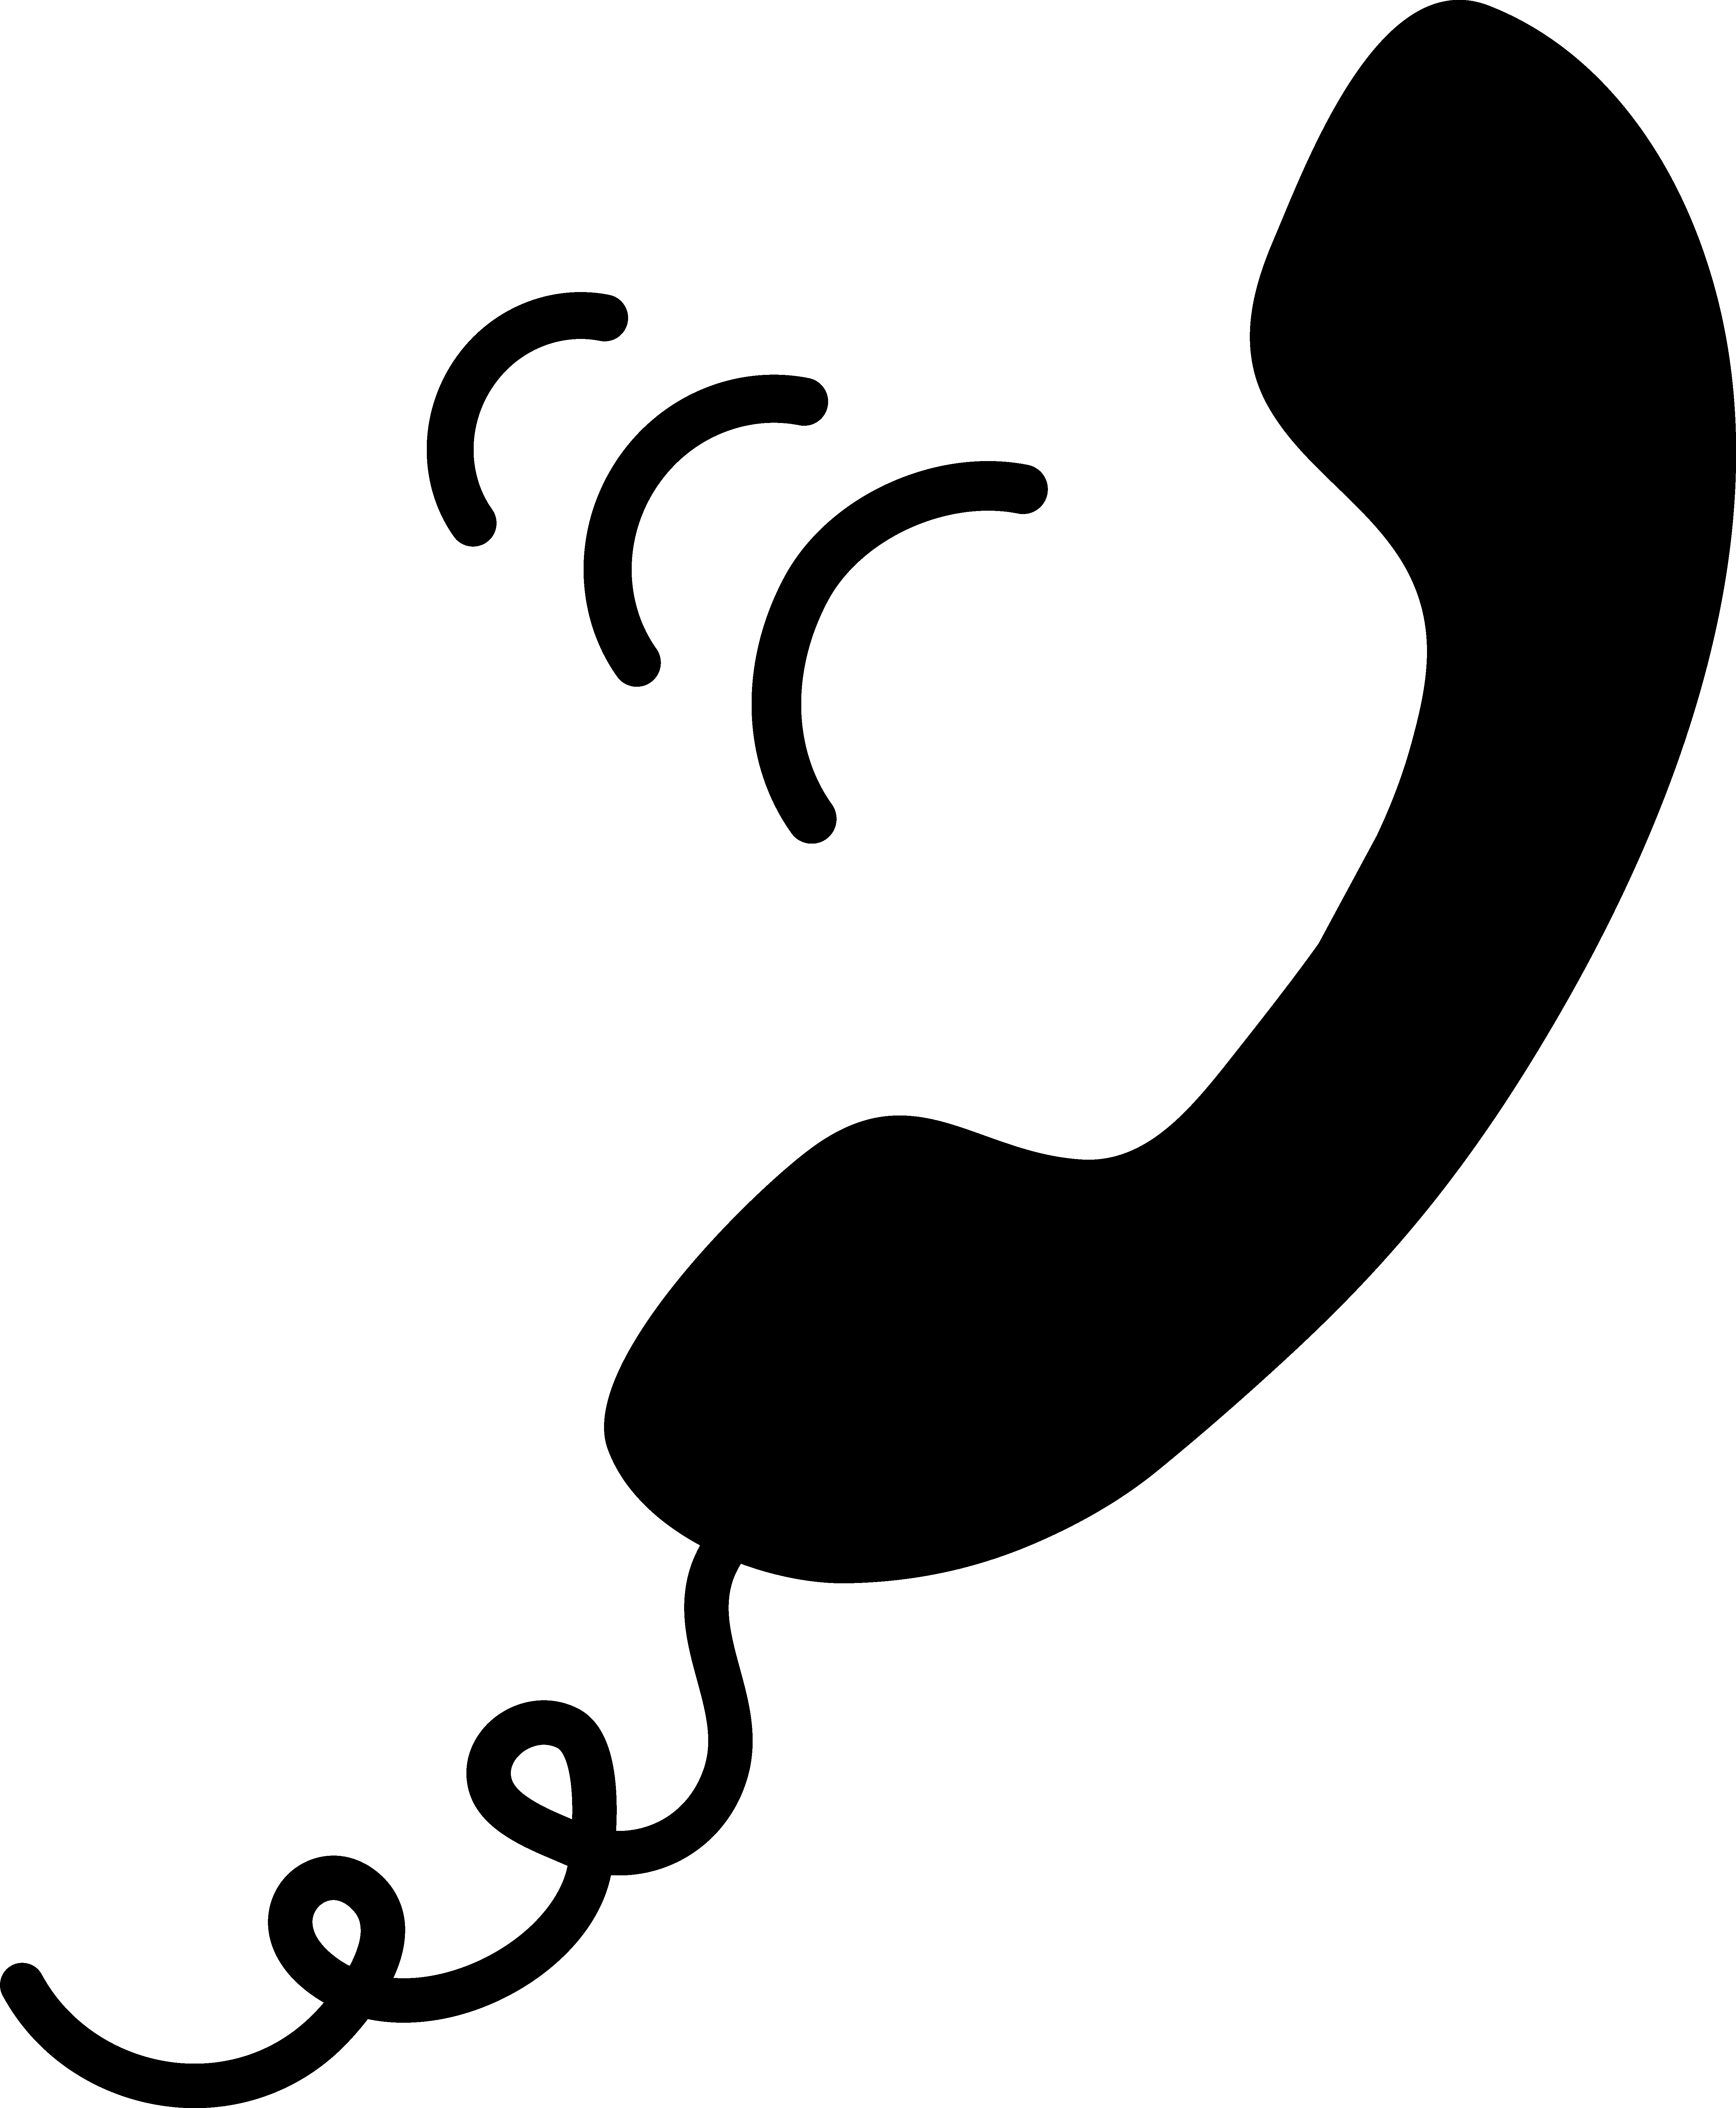 Clipart phone icon